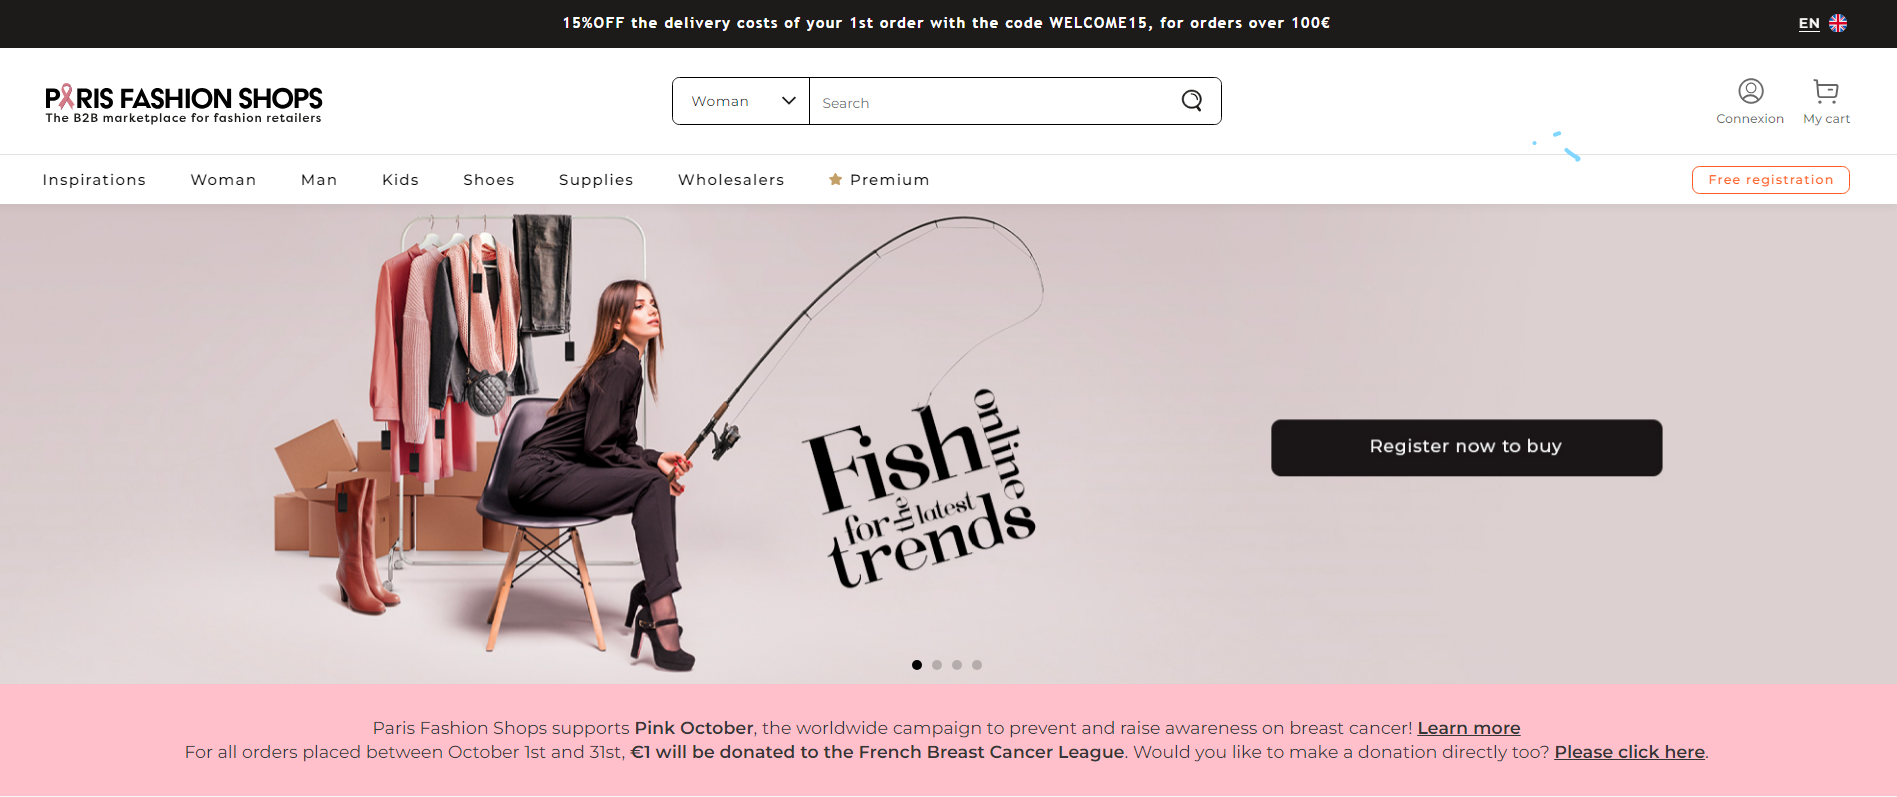 homepage of a wholesale clothing marketplace - Paris Fashion Shops